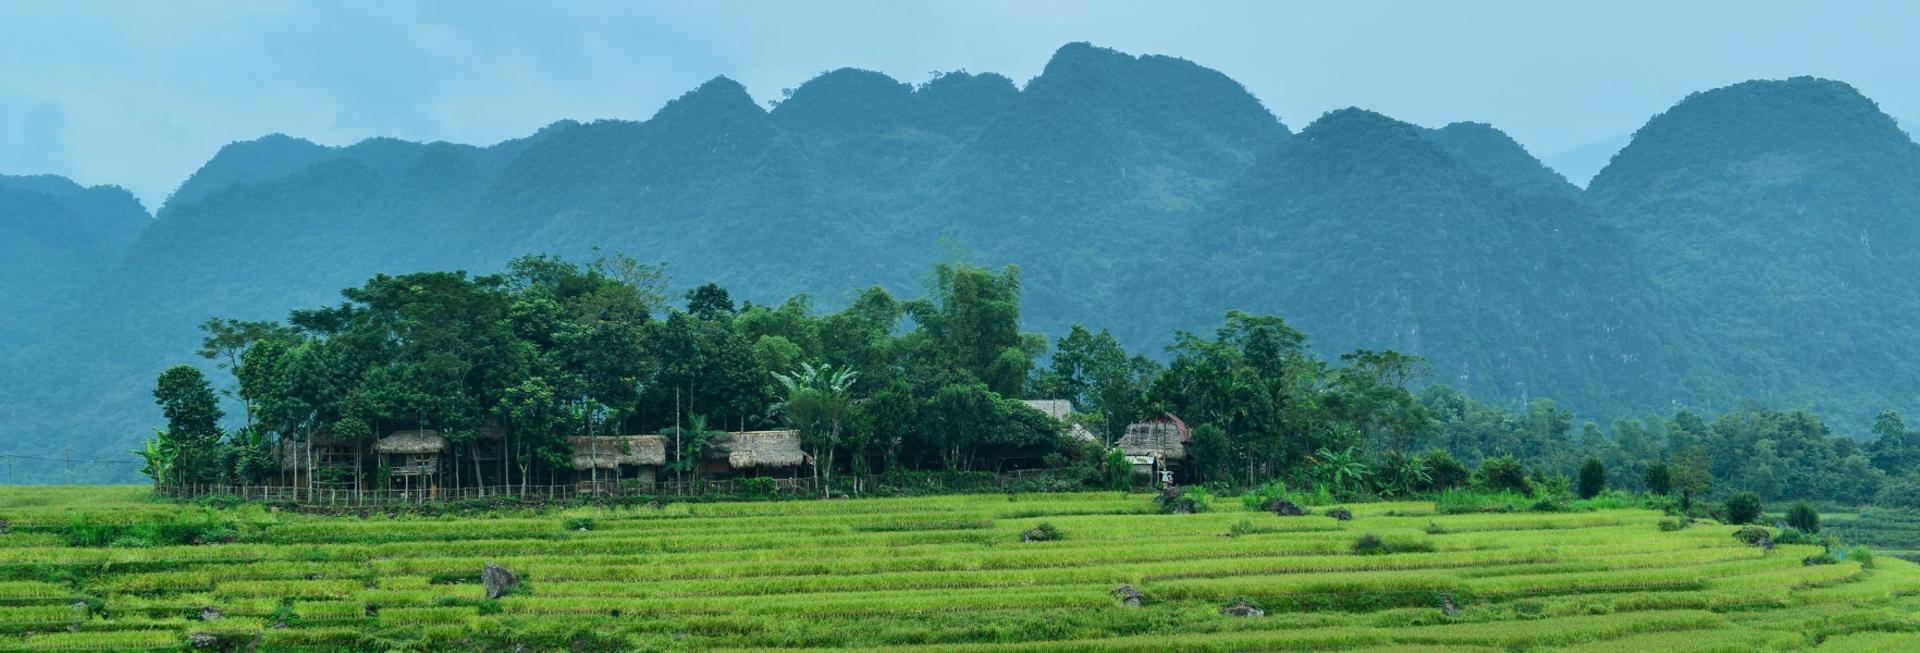 Pu Luong Nature Reserve, Vietnam